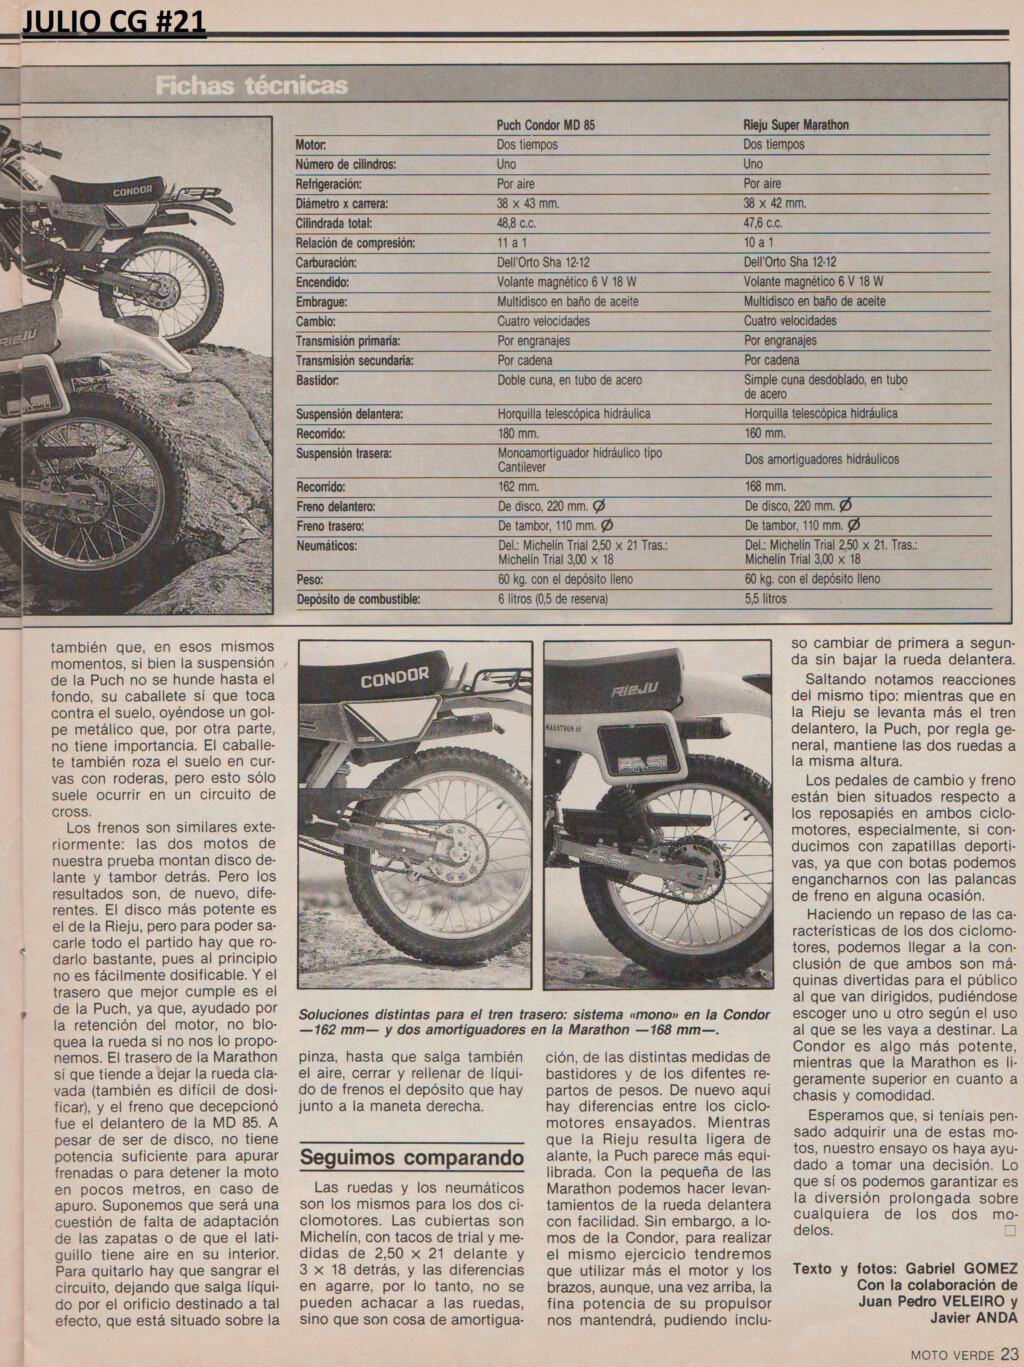 Comparativa Puch Condor / Super Marathon, 1986 Escze270